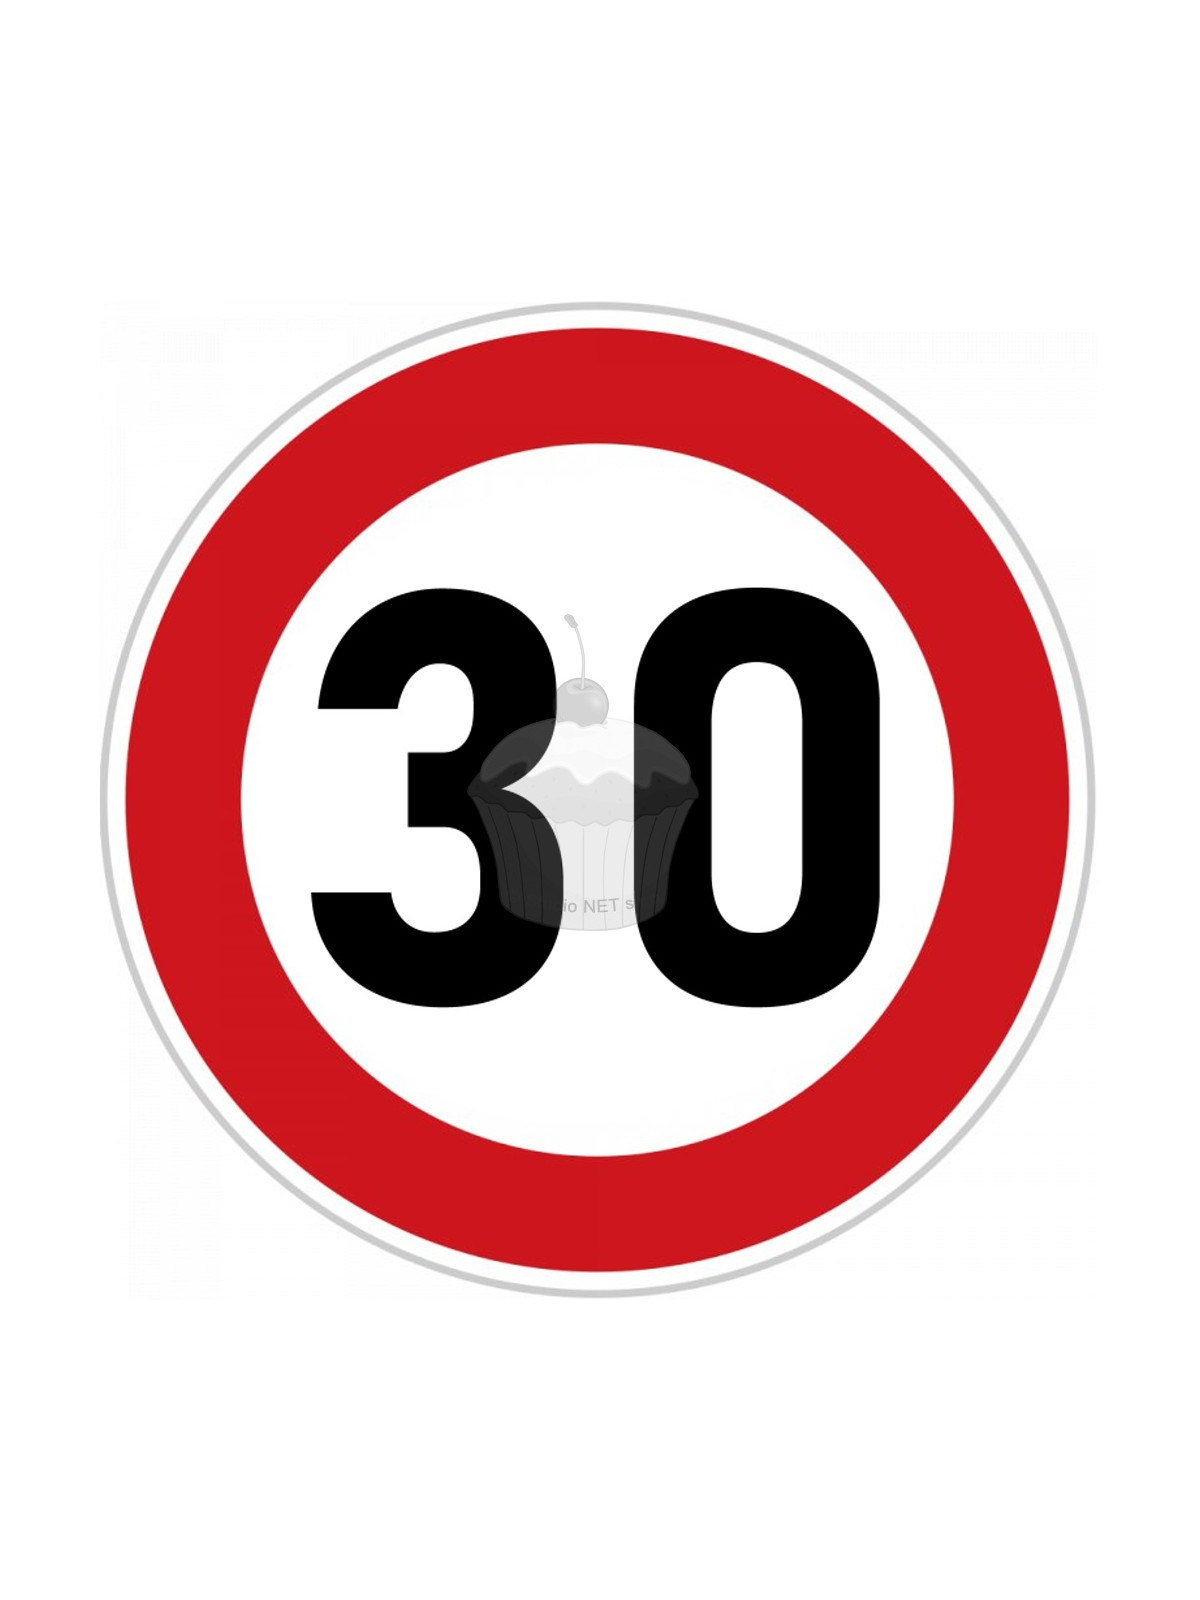 Edible paper "30th Birthday" ban sign A4